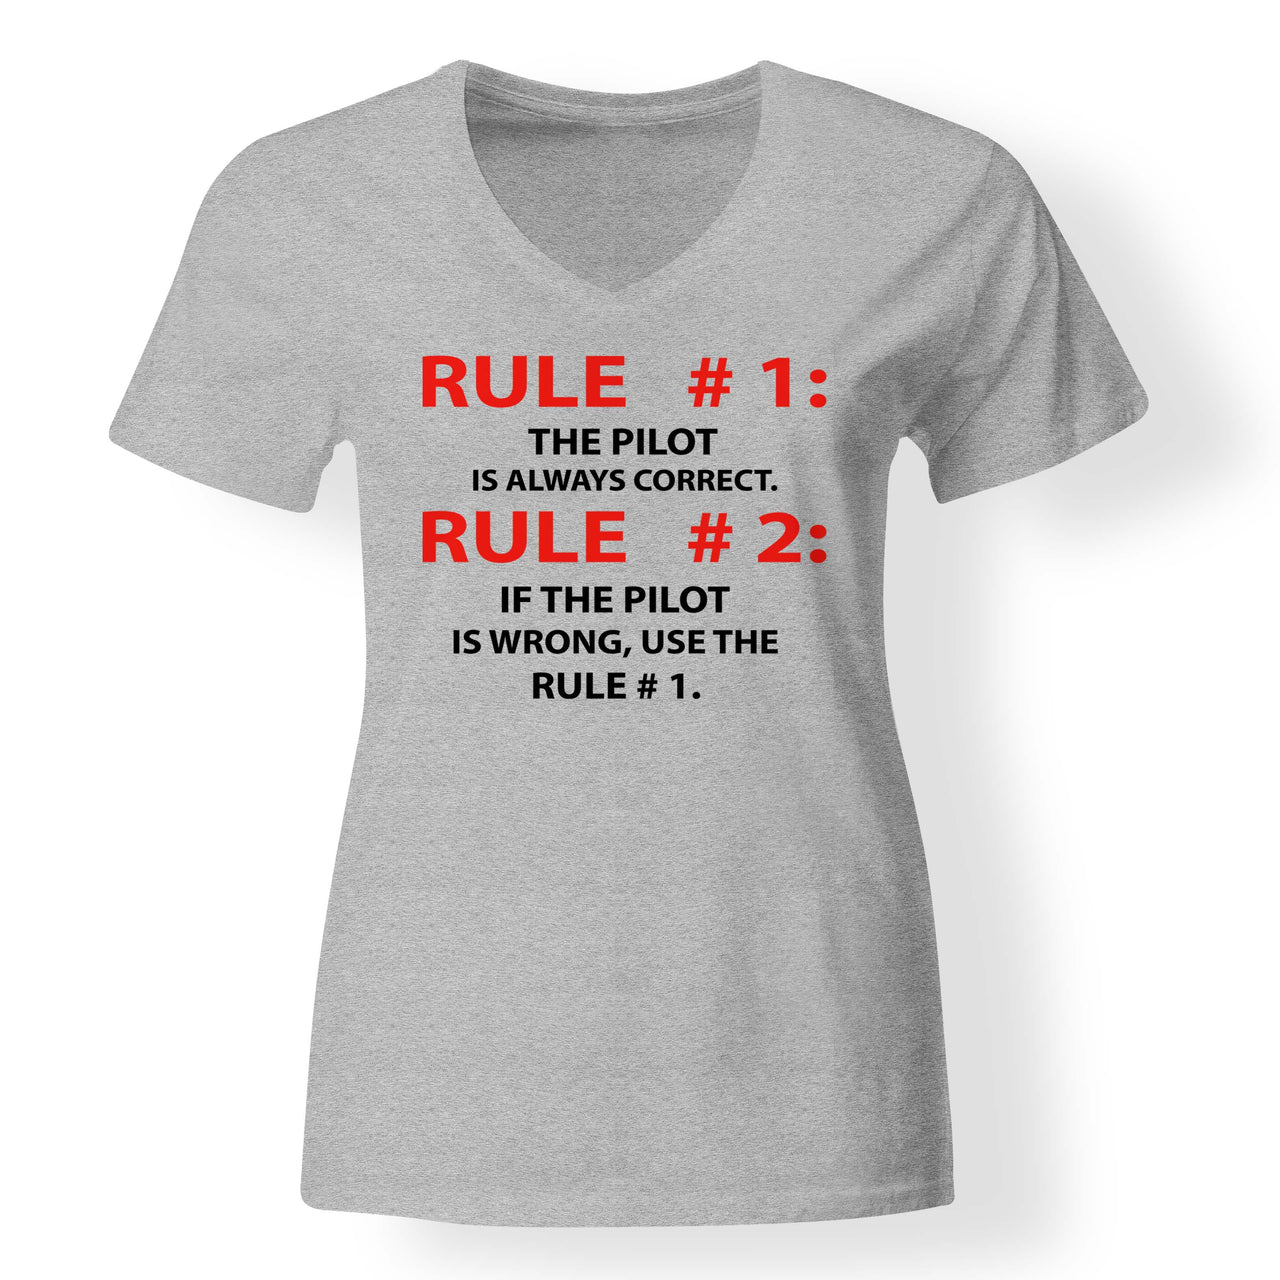 Rule 1 - Pilot is Always Correct Designed V-Neck T-Shirts